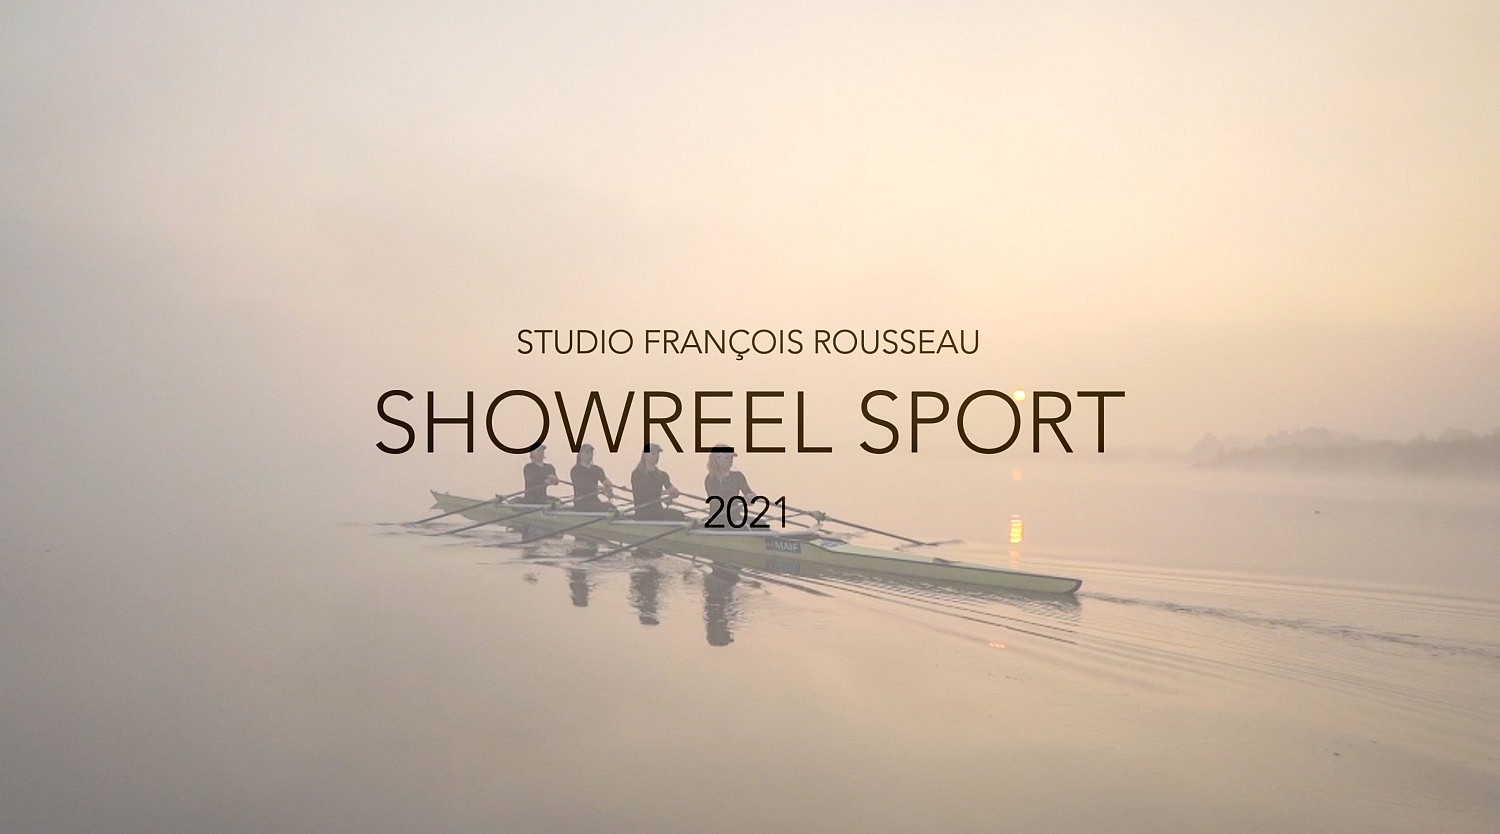 SHOWREEL SPORT STUDIO FRANÇOIS ROUSSEAU 2021 /  DIRECTOR + DOP <br />
KEMMEL PROD 